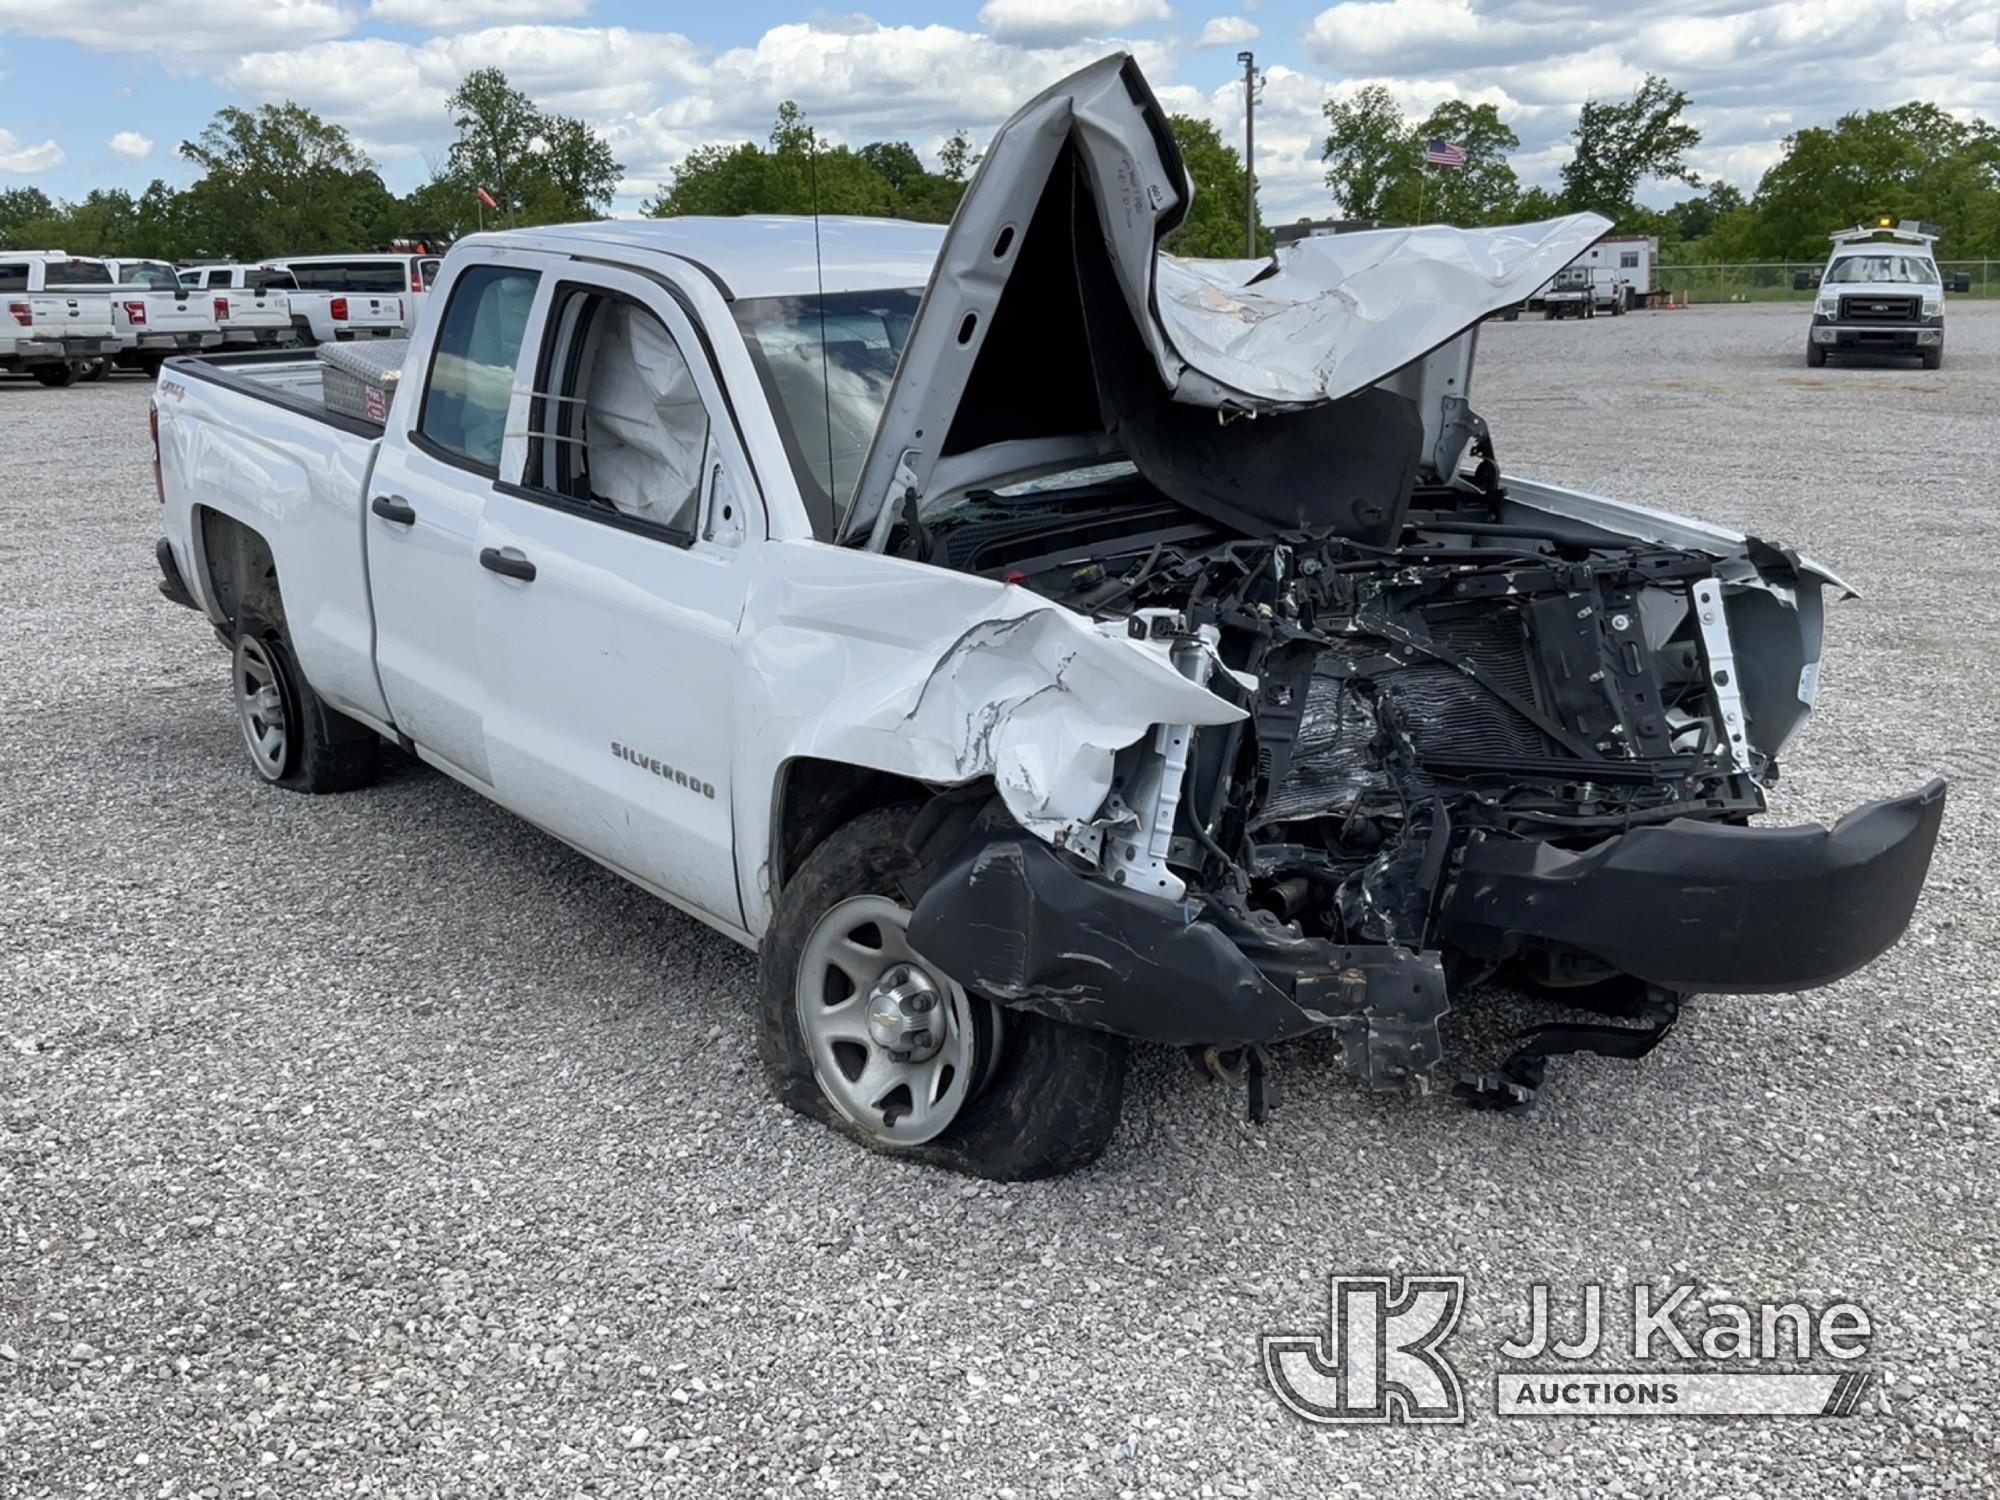 (Verona, KY) 2017 Chevrolet Silverado 1500 4x4 Crew-Cab Pickup Truck Not Running, Condition Unknown,